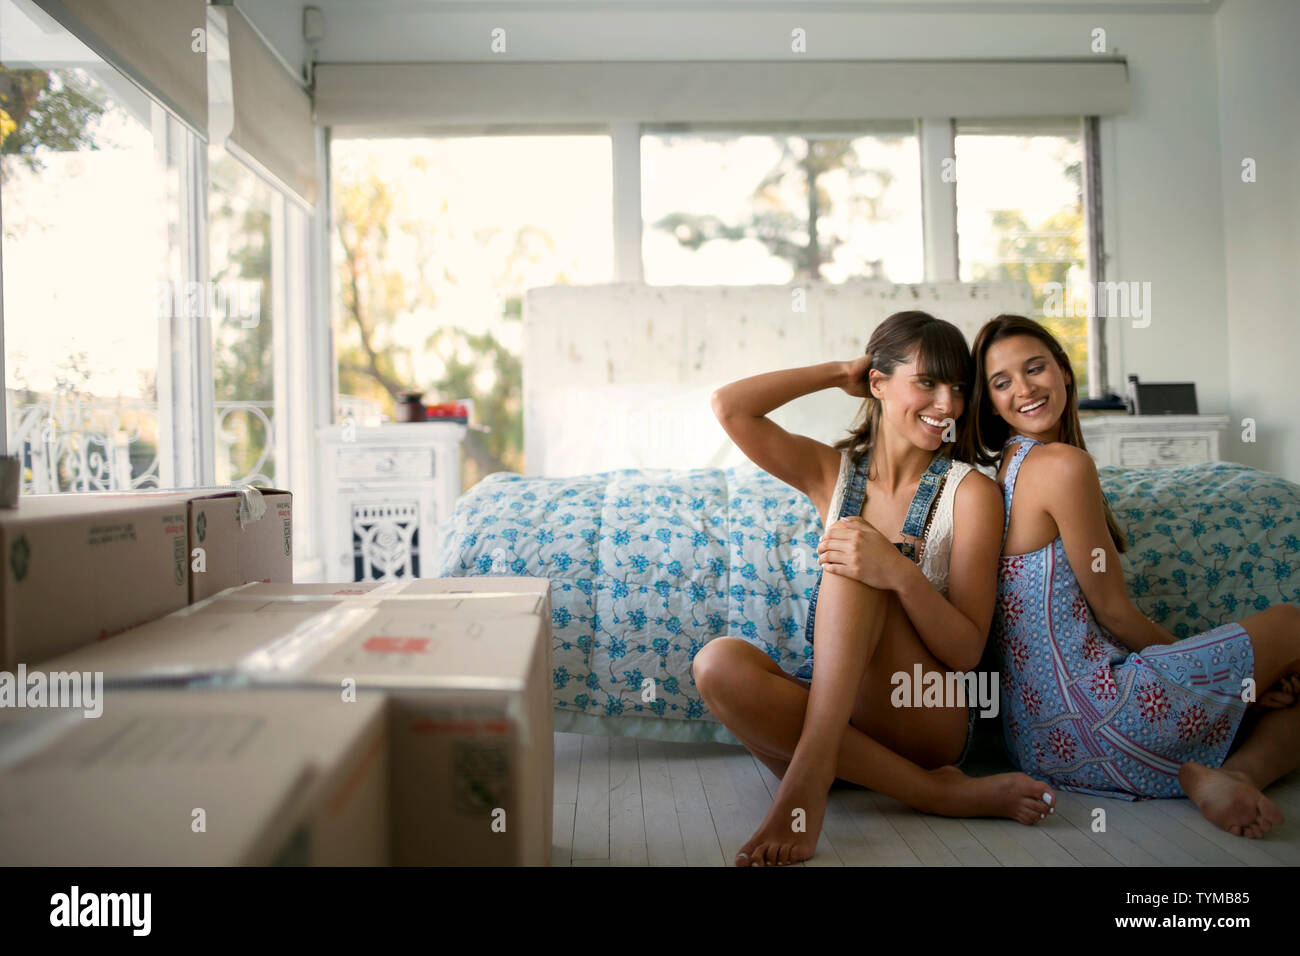 Two friends sitting on bedroom floor Stock Photo